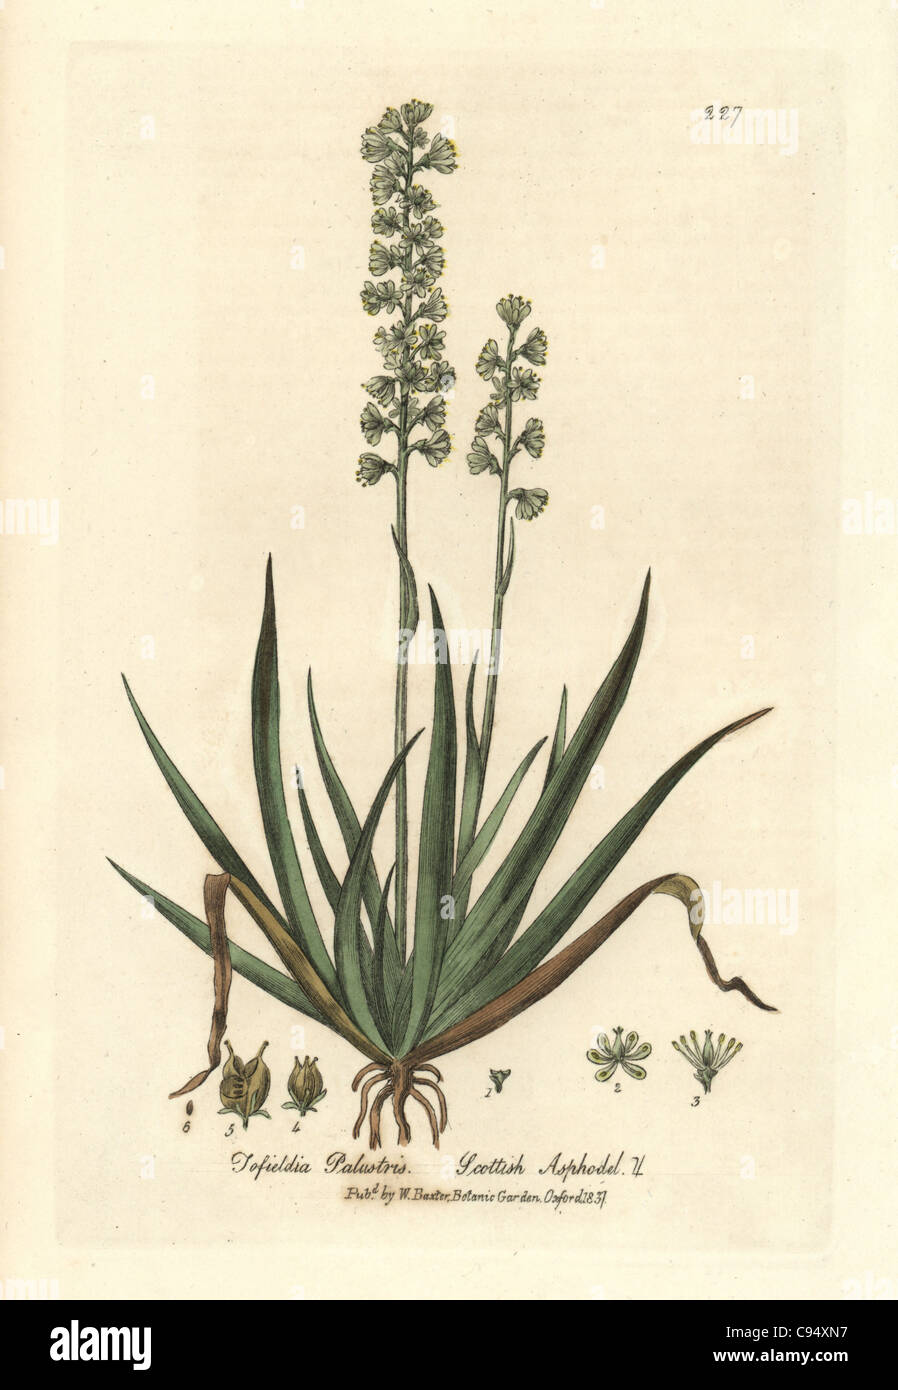 Scottish asphodel, Tofieldia palustris. Stock Photo